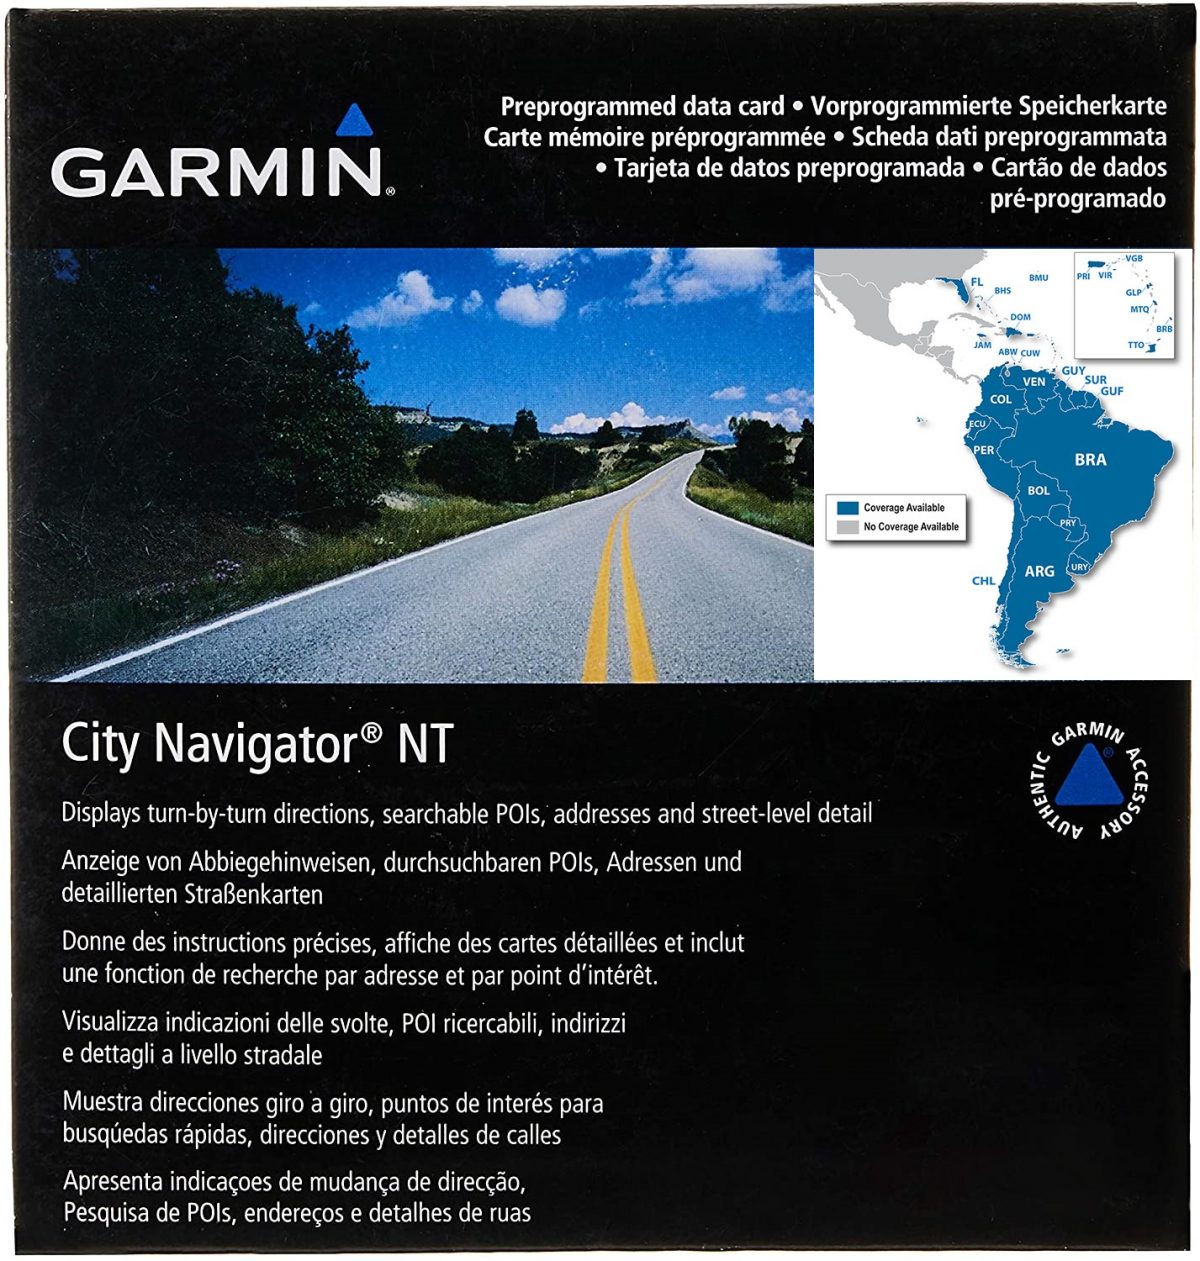 Garmin City Navigator South America NT